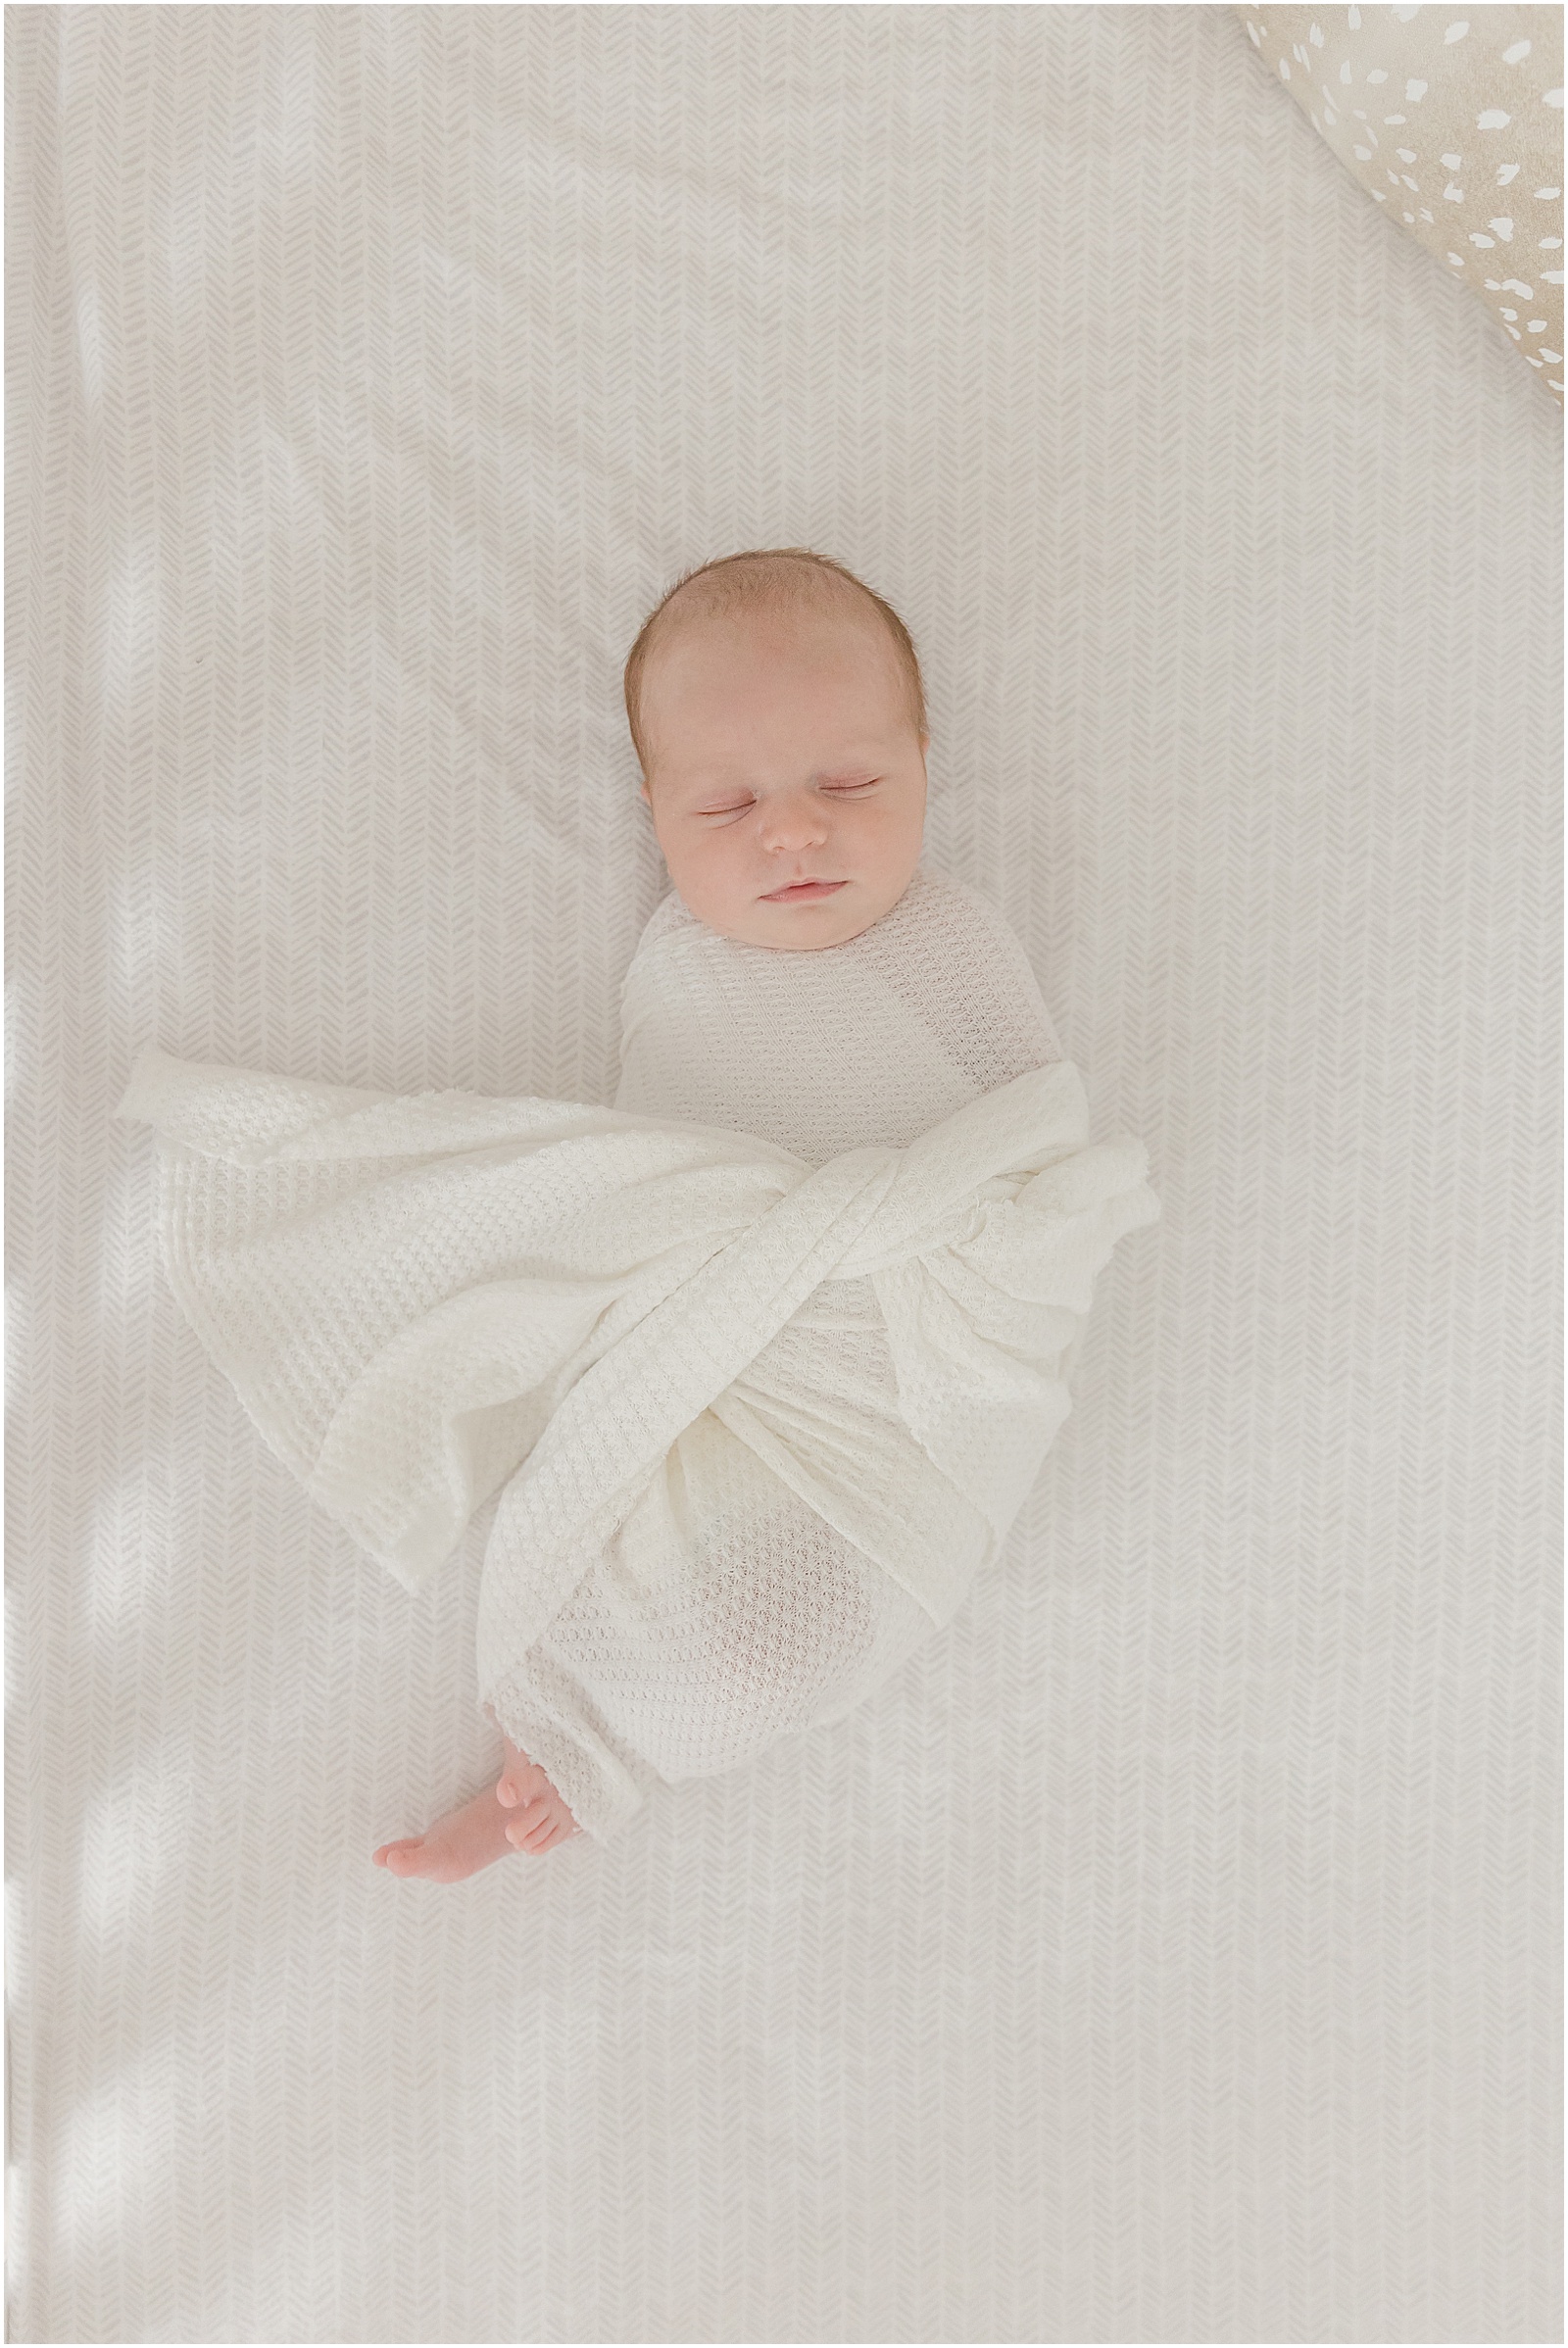 Chamblee newborn photography, lifestyle newborn photography, in home newborn photos, dogs and baby, dog inspired nursery